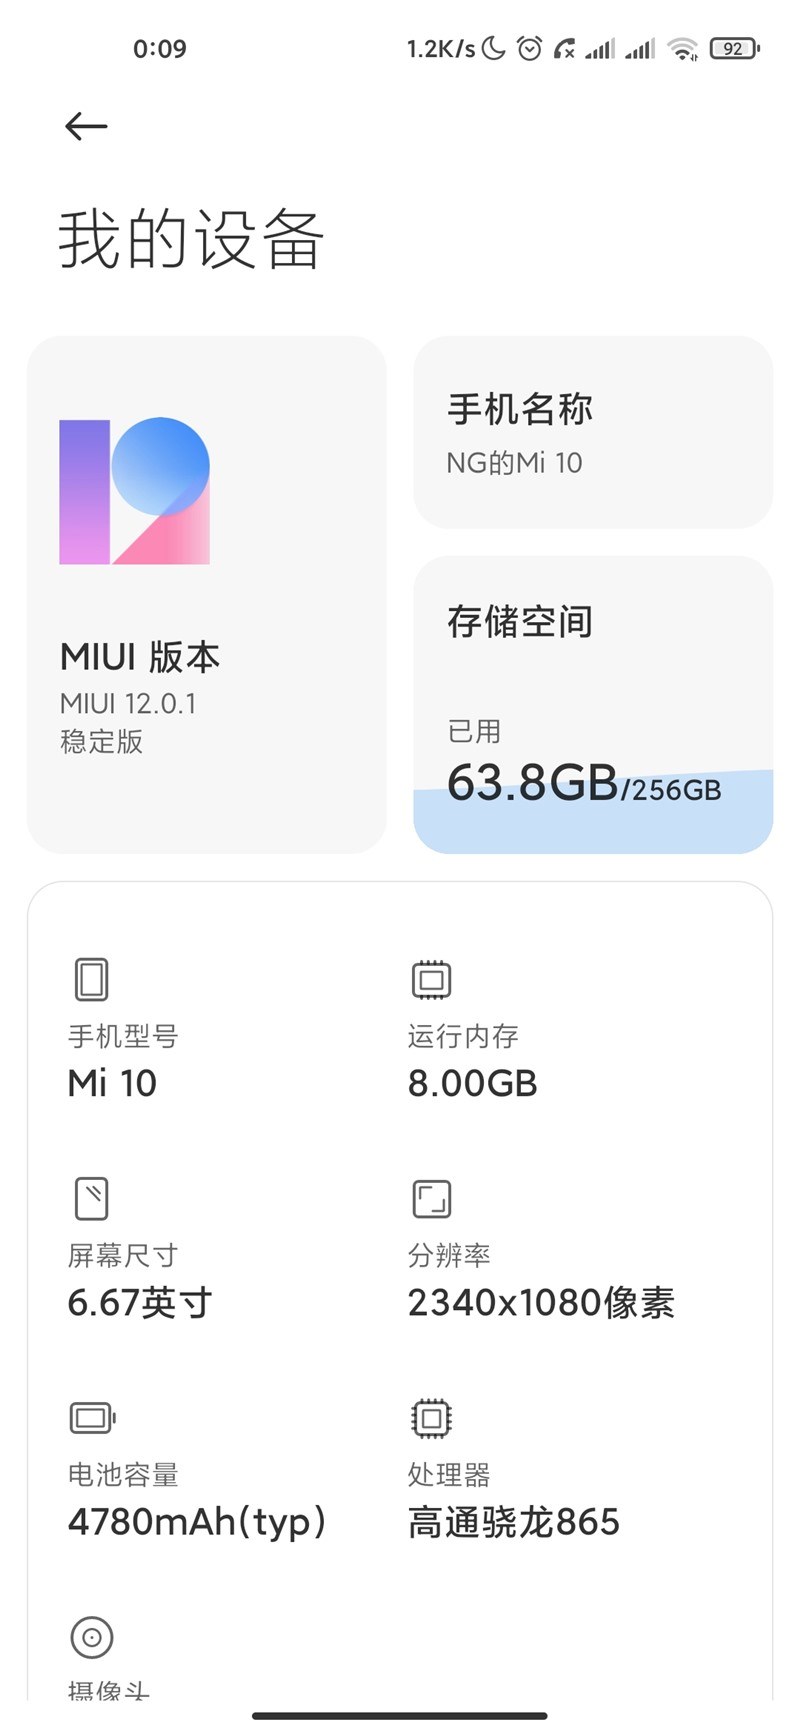 MIUI 12 Xiaomi Mi 10